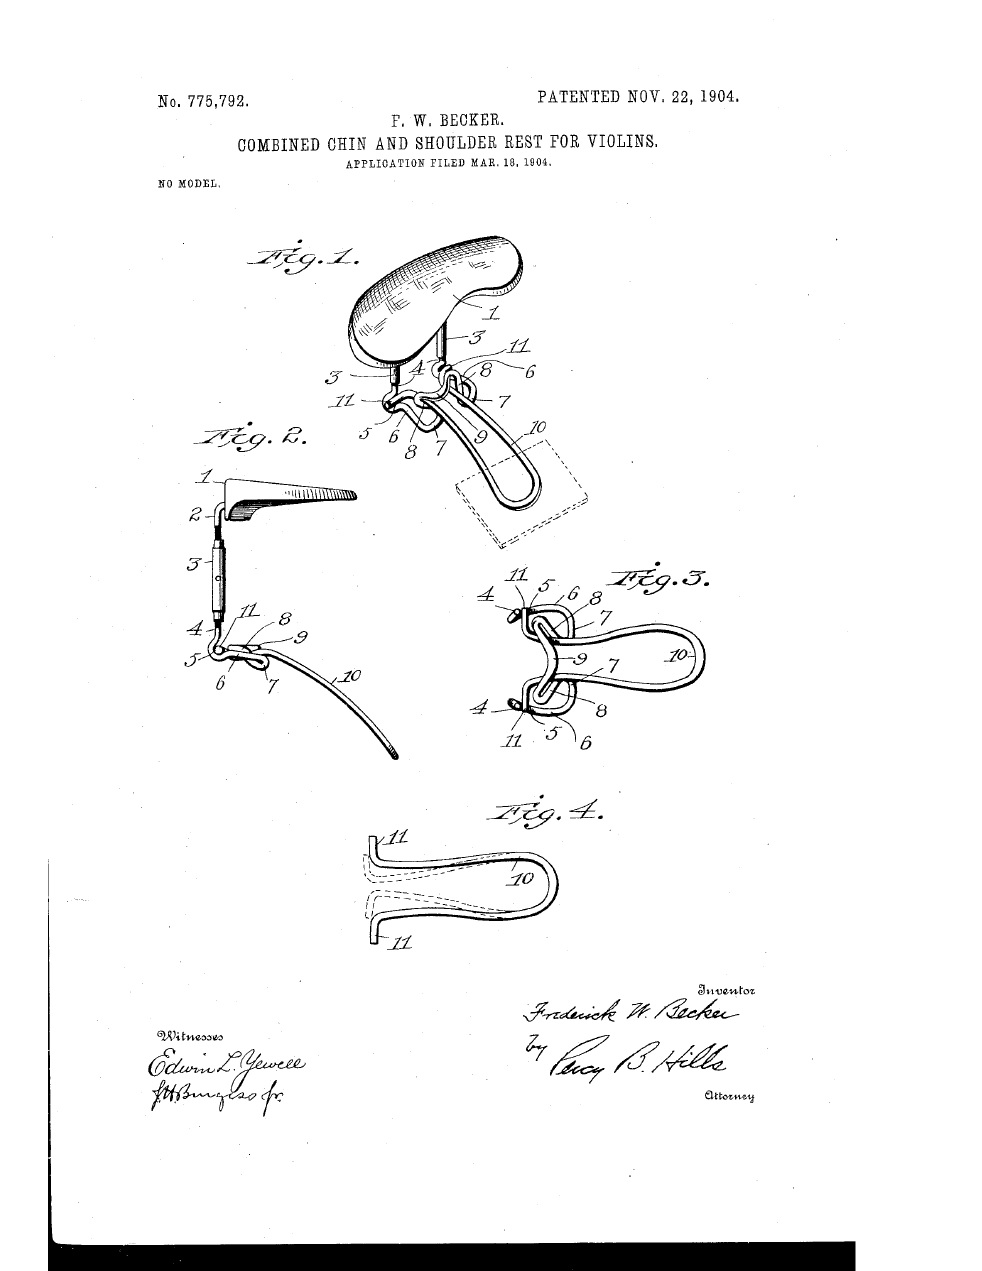 Violin Shoulder Rest - combined chin and shoulder rest patent by F. Becker